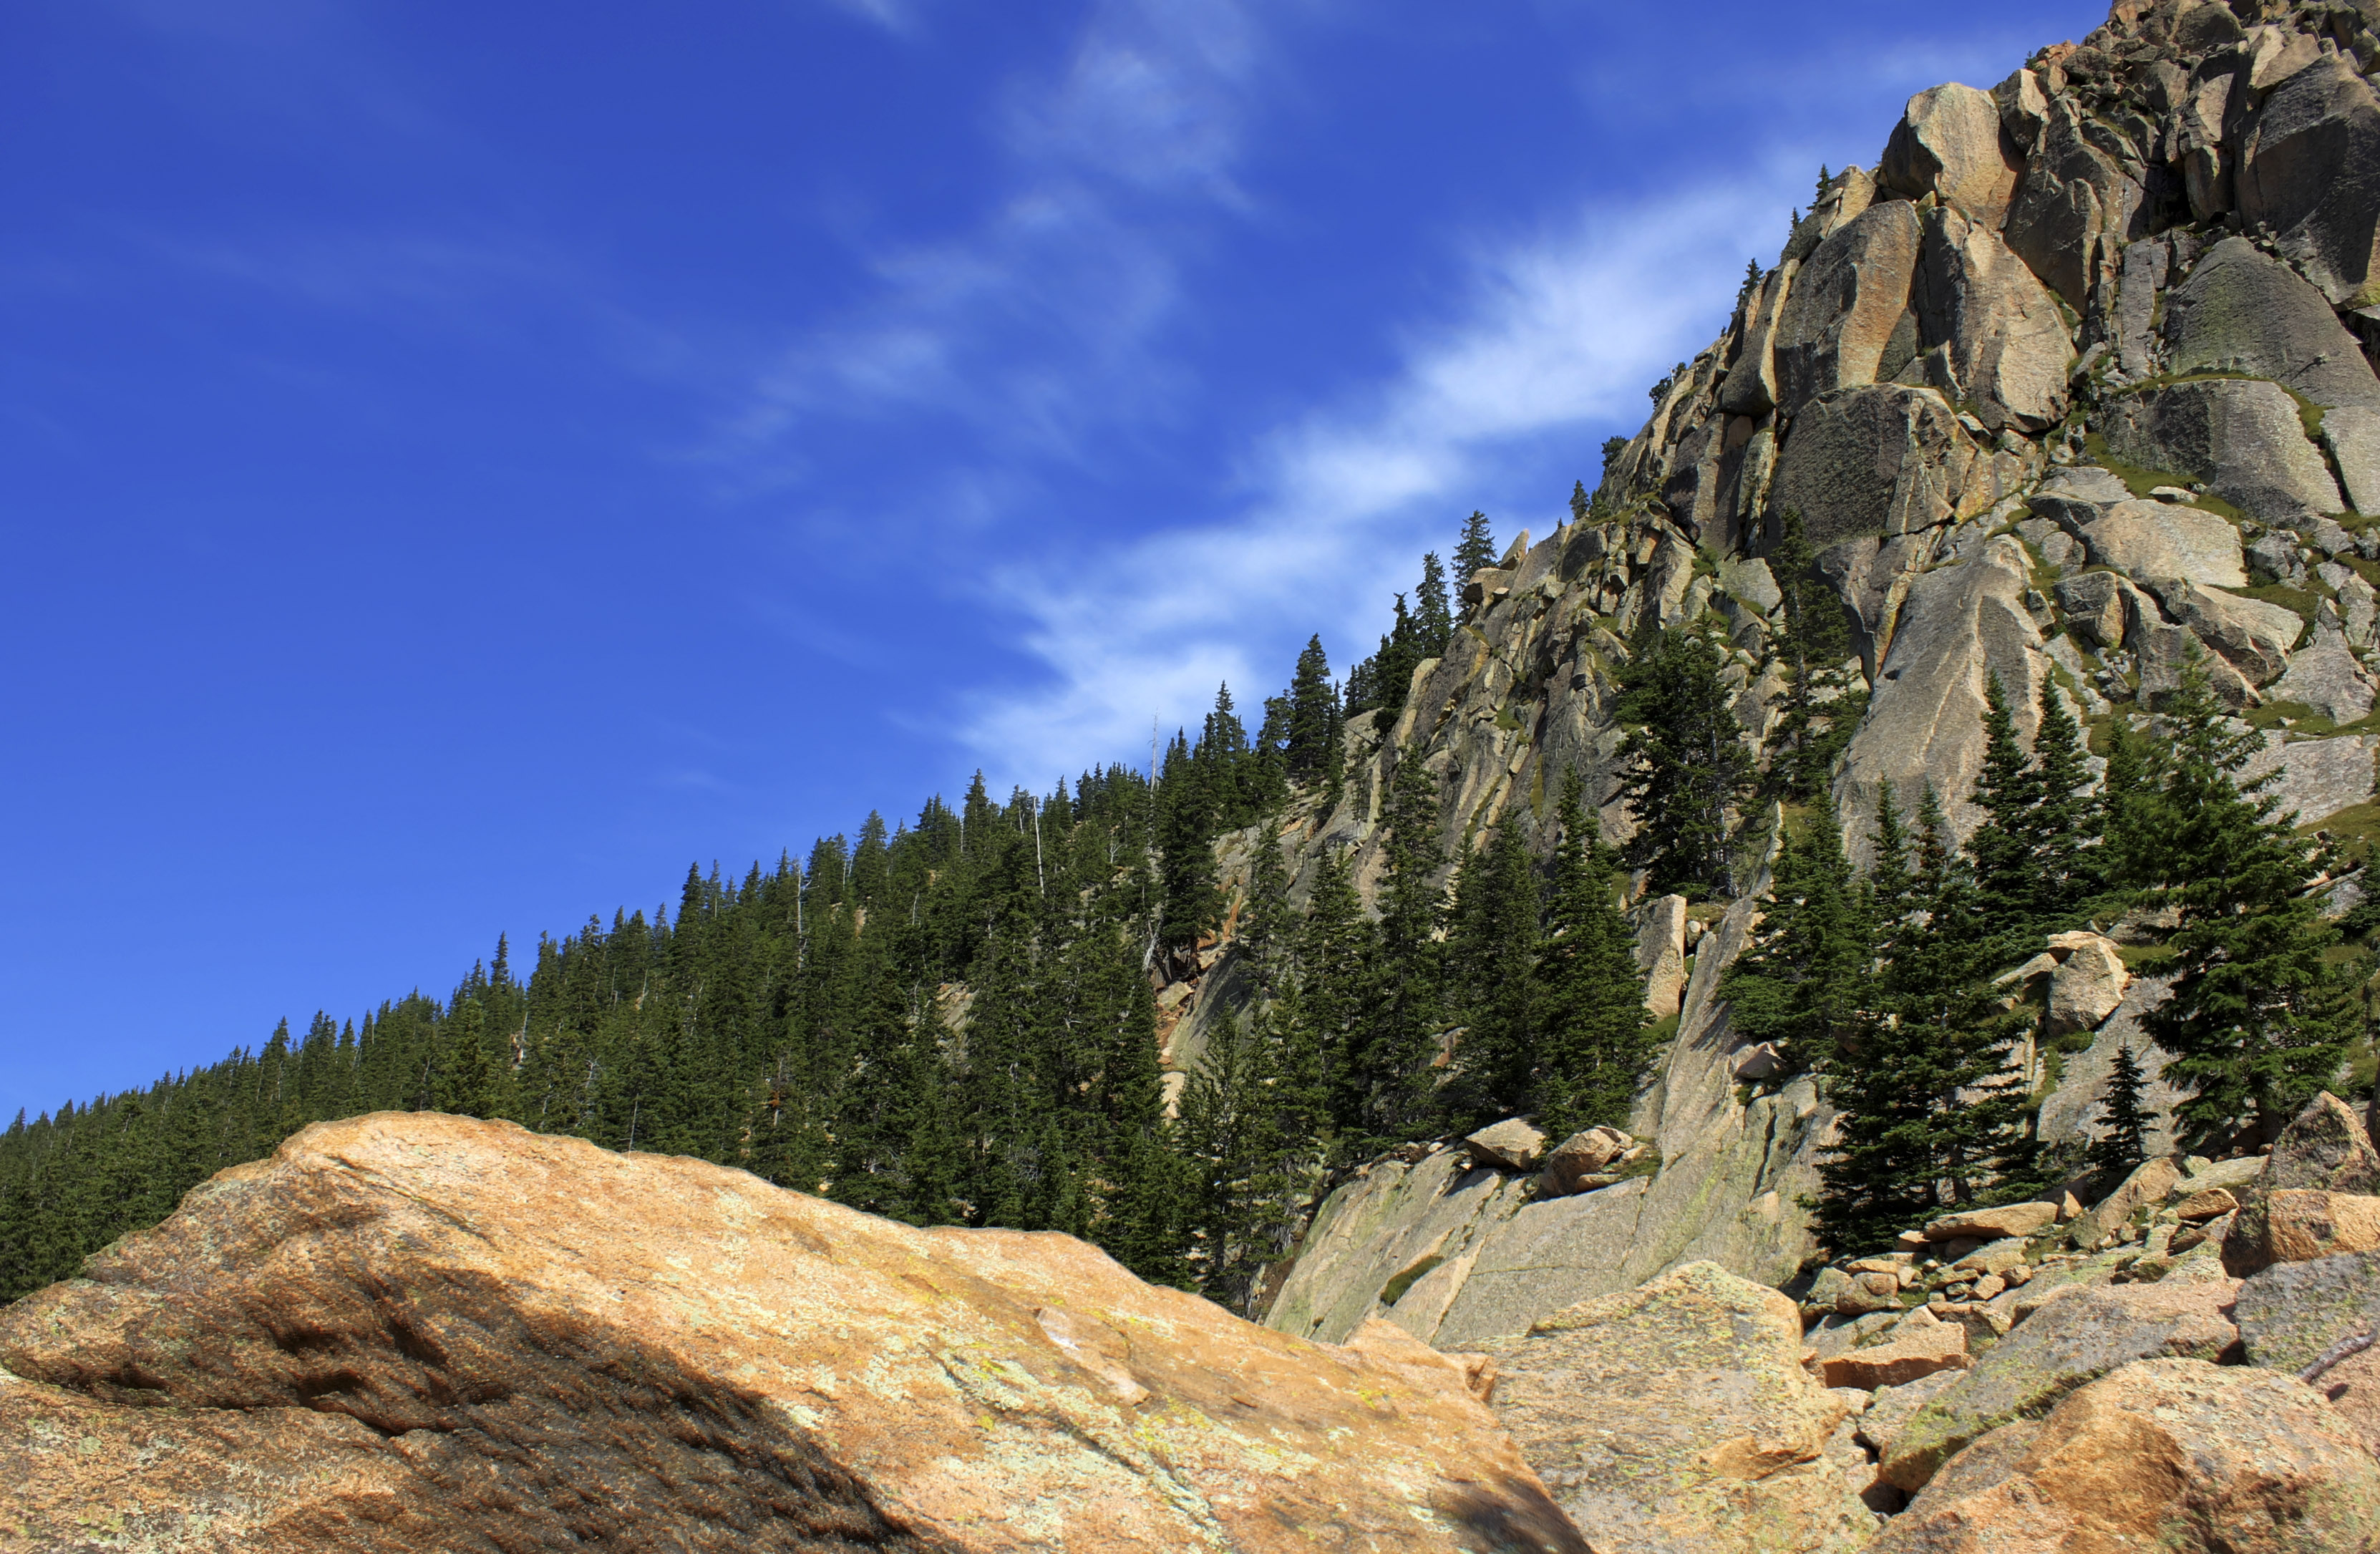 Mountainside at Pikes Peak, Colorado image - Free stock photo ...